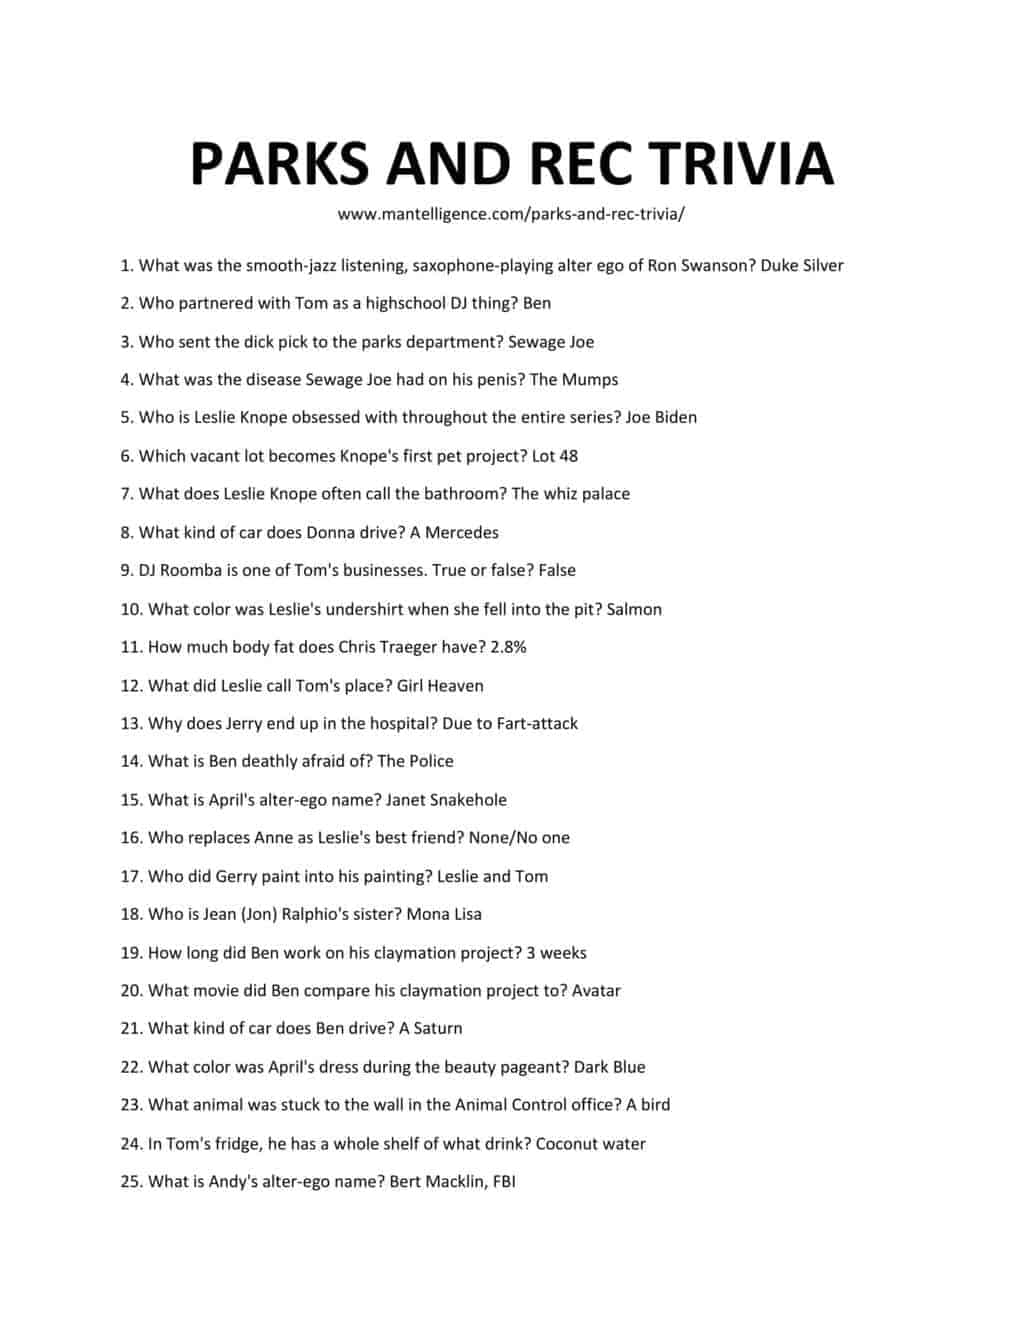 Downloadable and Printable List of Trivia